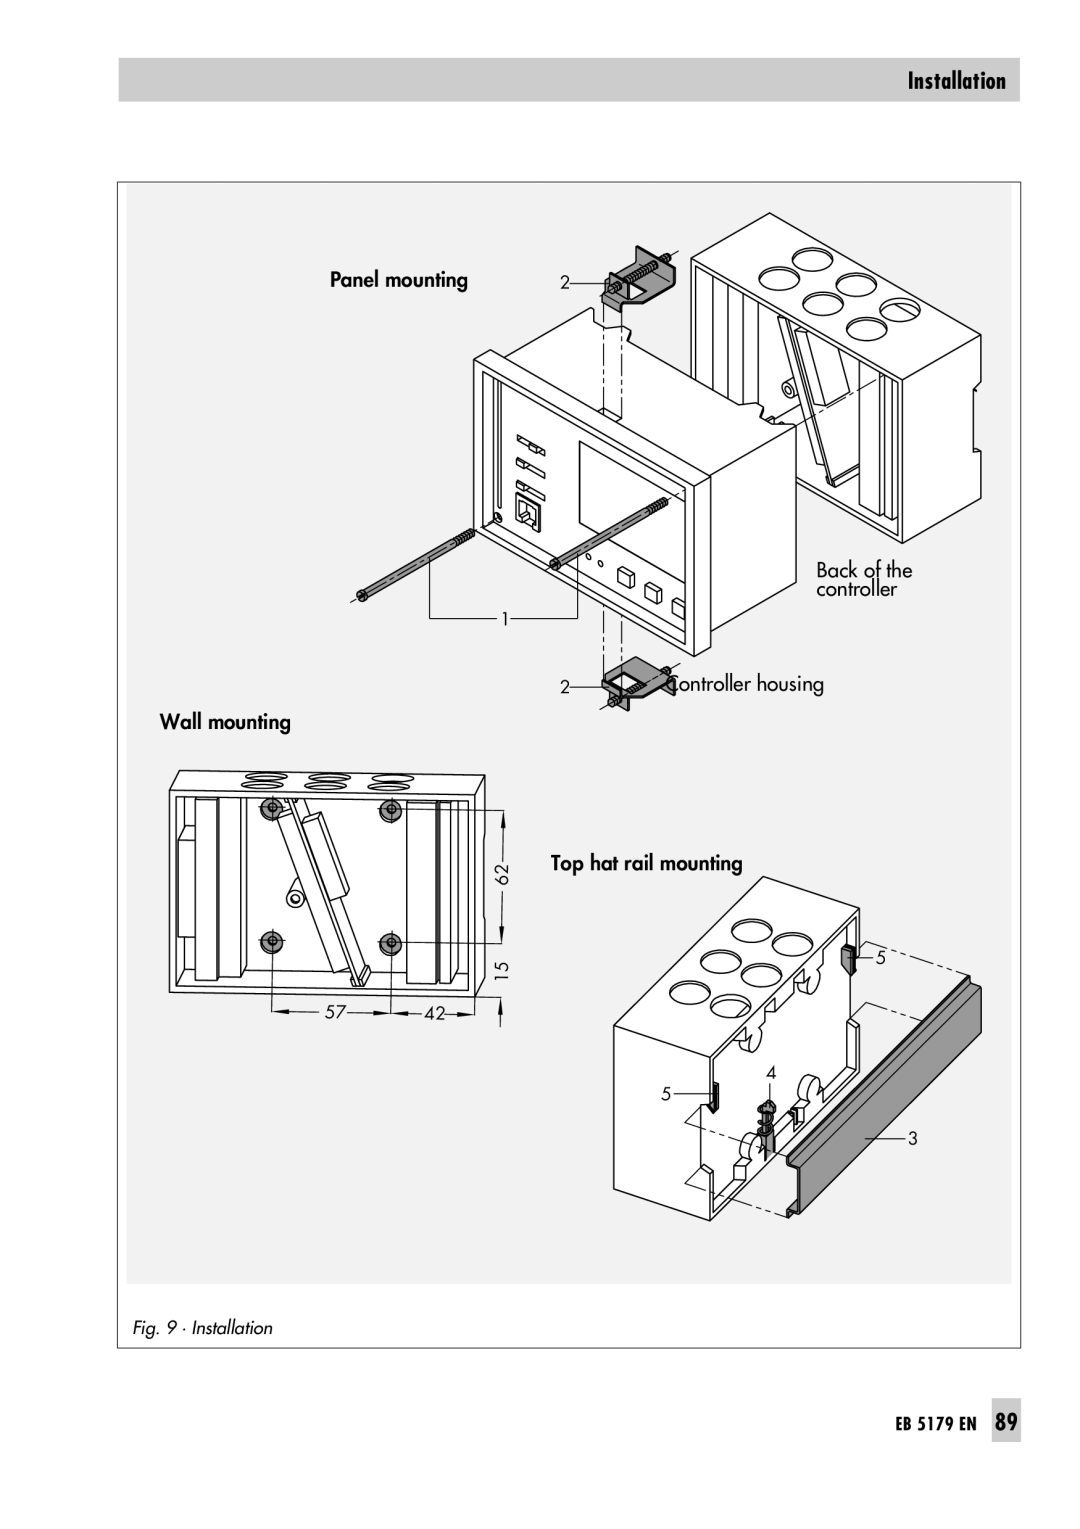 Samson Panel mounting, Back of the, controller, Controller housing, Wall mounting, Top hat rail mounting, EB 5179 EN 